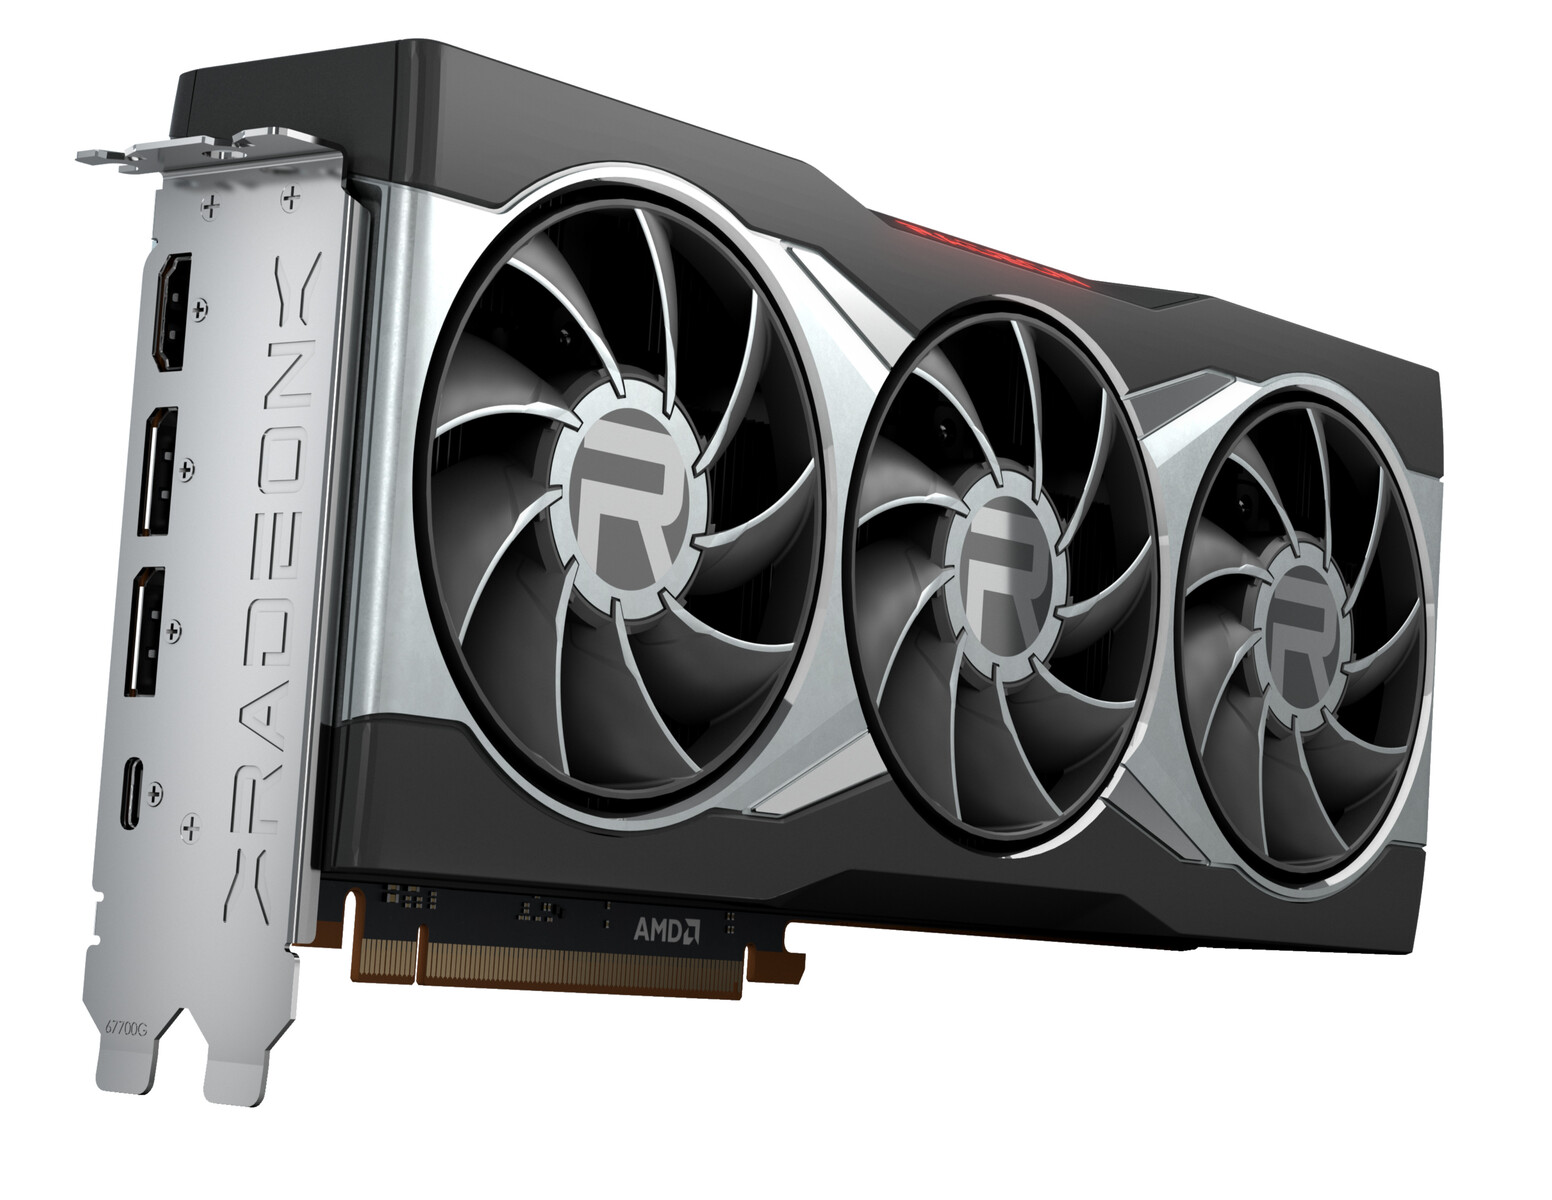 AMD Radeon RX 6800 XT (Desktop) GPU Benchmarks and Specs